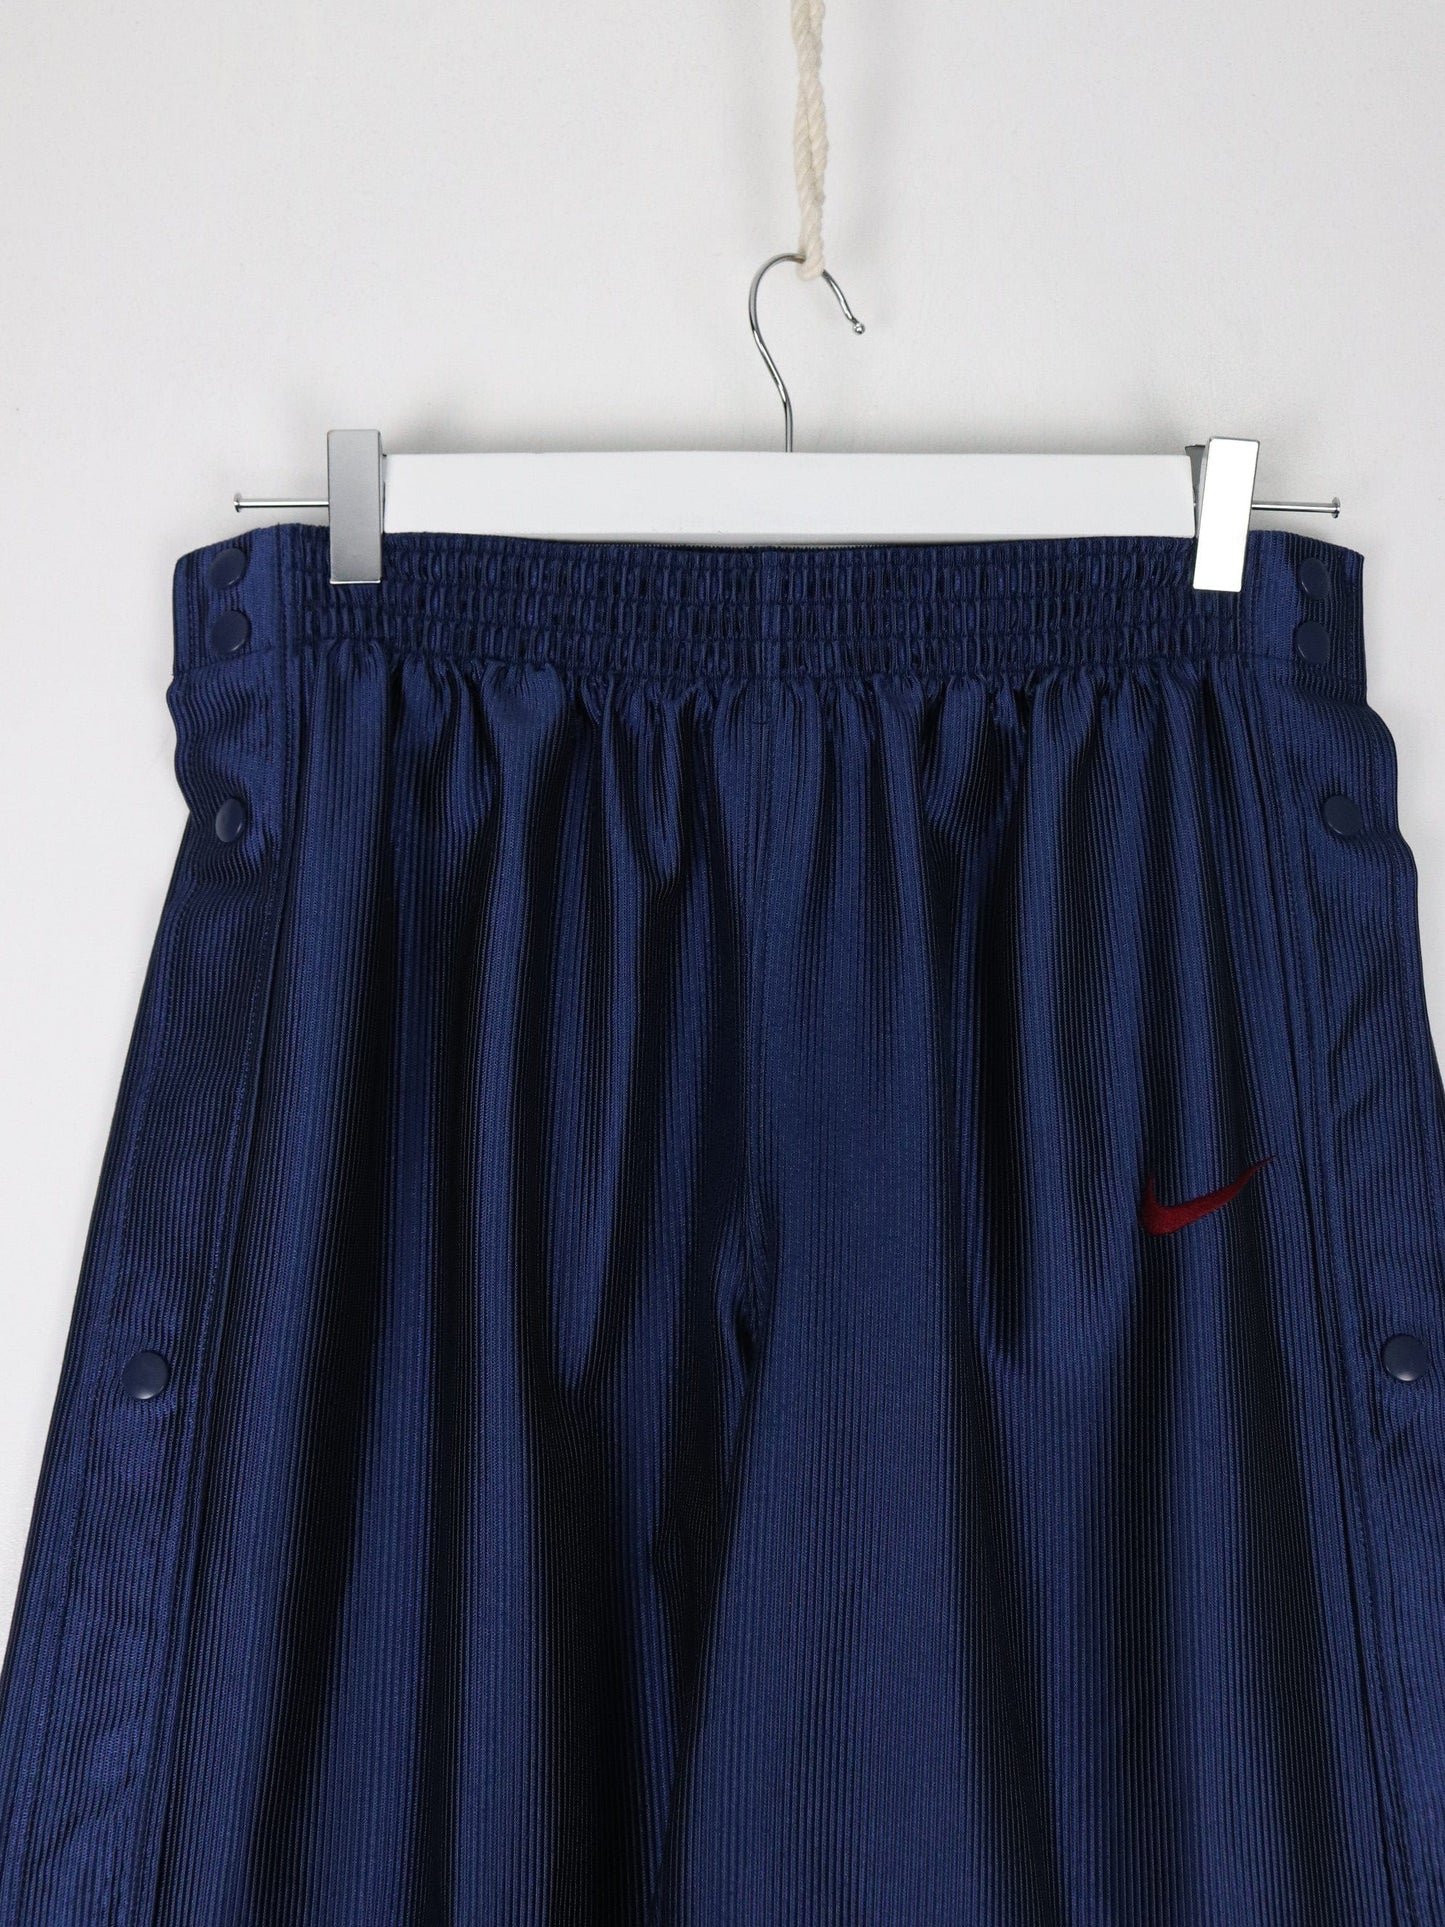 Nike Pants Vintage Nike Pants Youth Large Blue Tearaways 90s Athletic Track Sweat 26 x 27